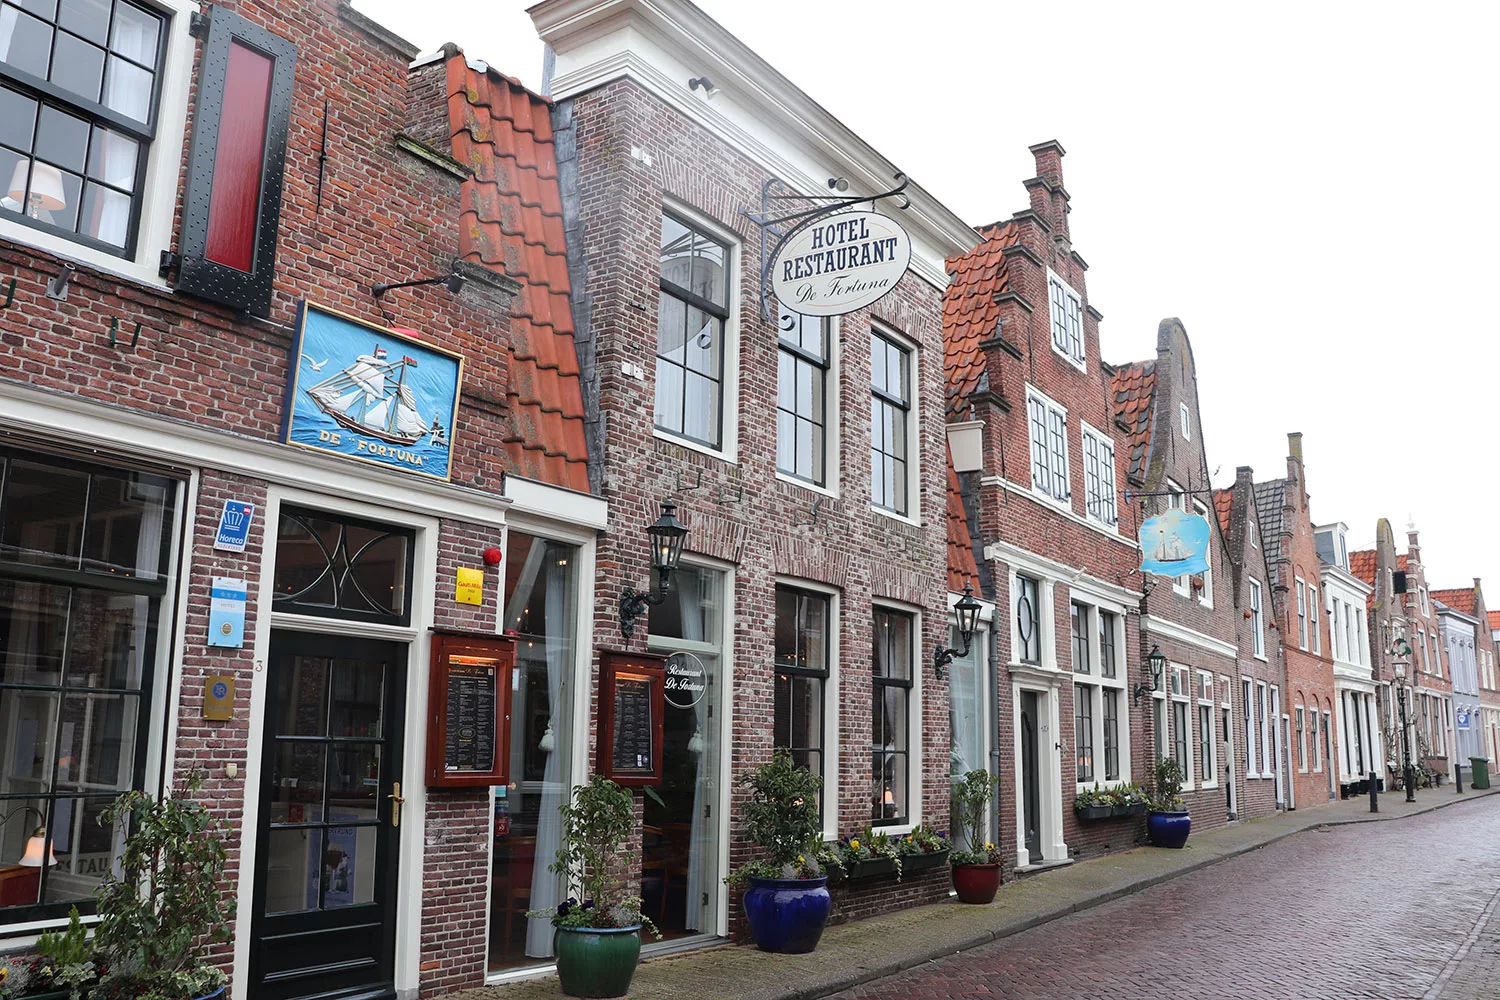 Edam, the Netherlands